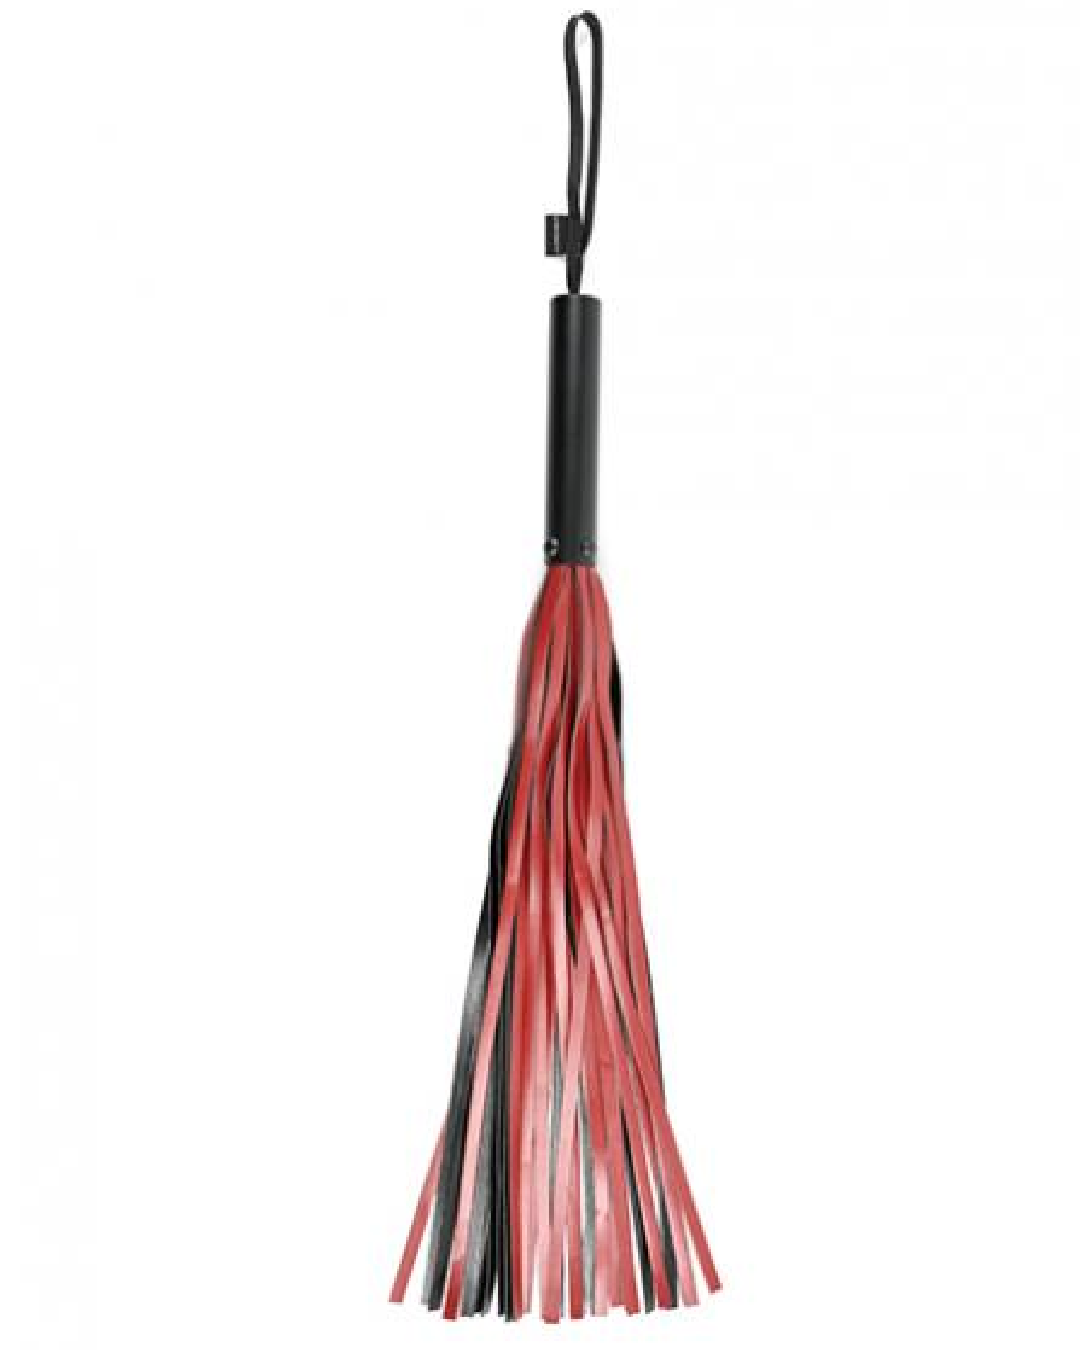 Saffron Flogger by Sportsheets black and red flogger upright